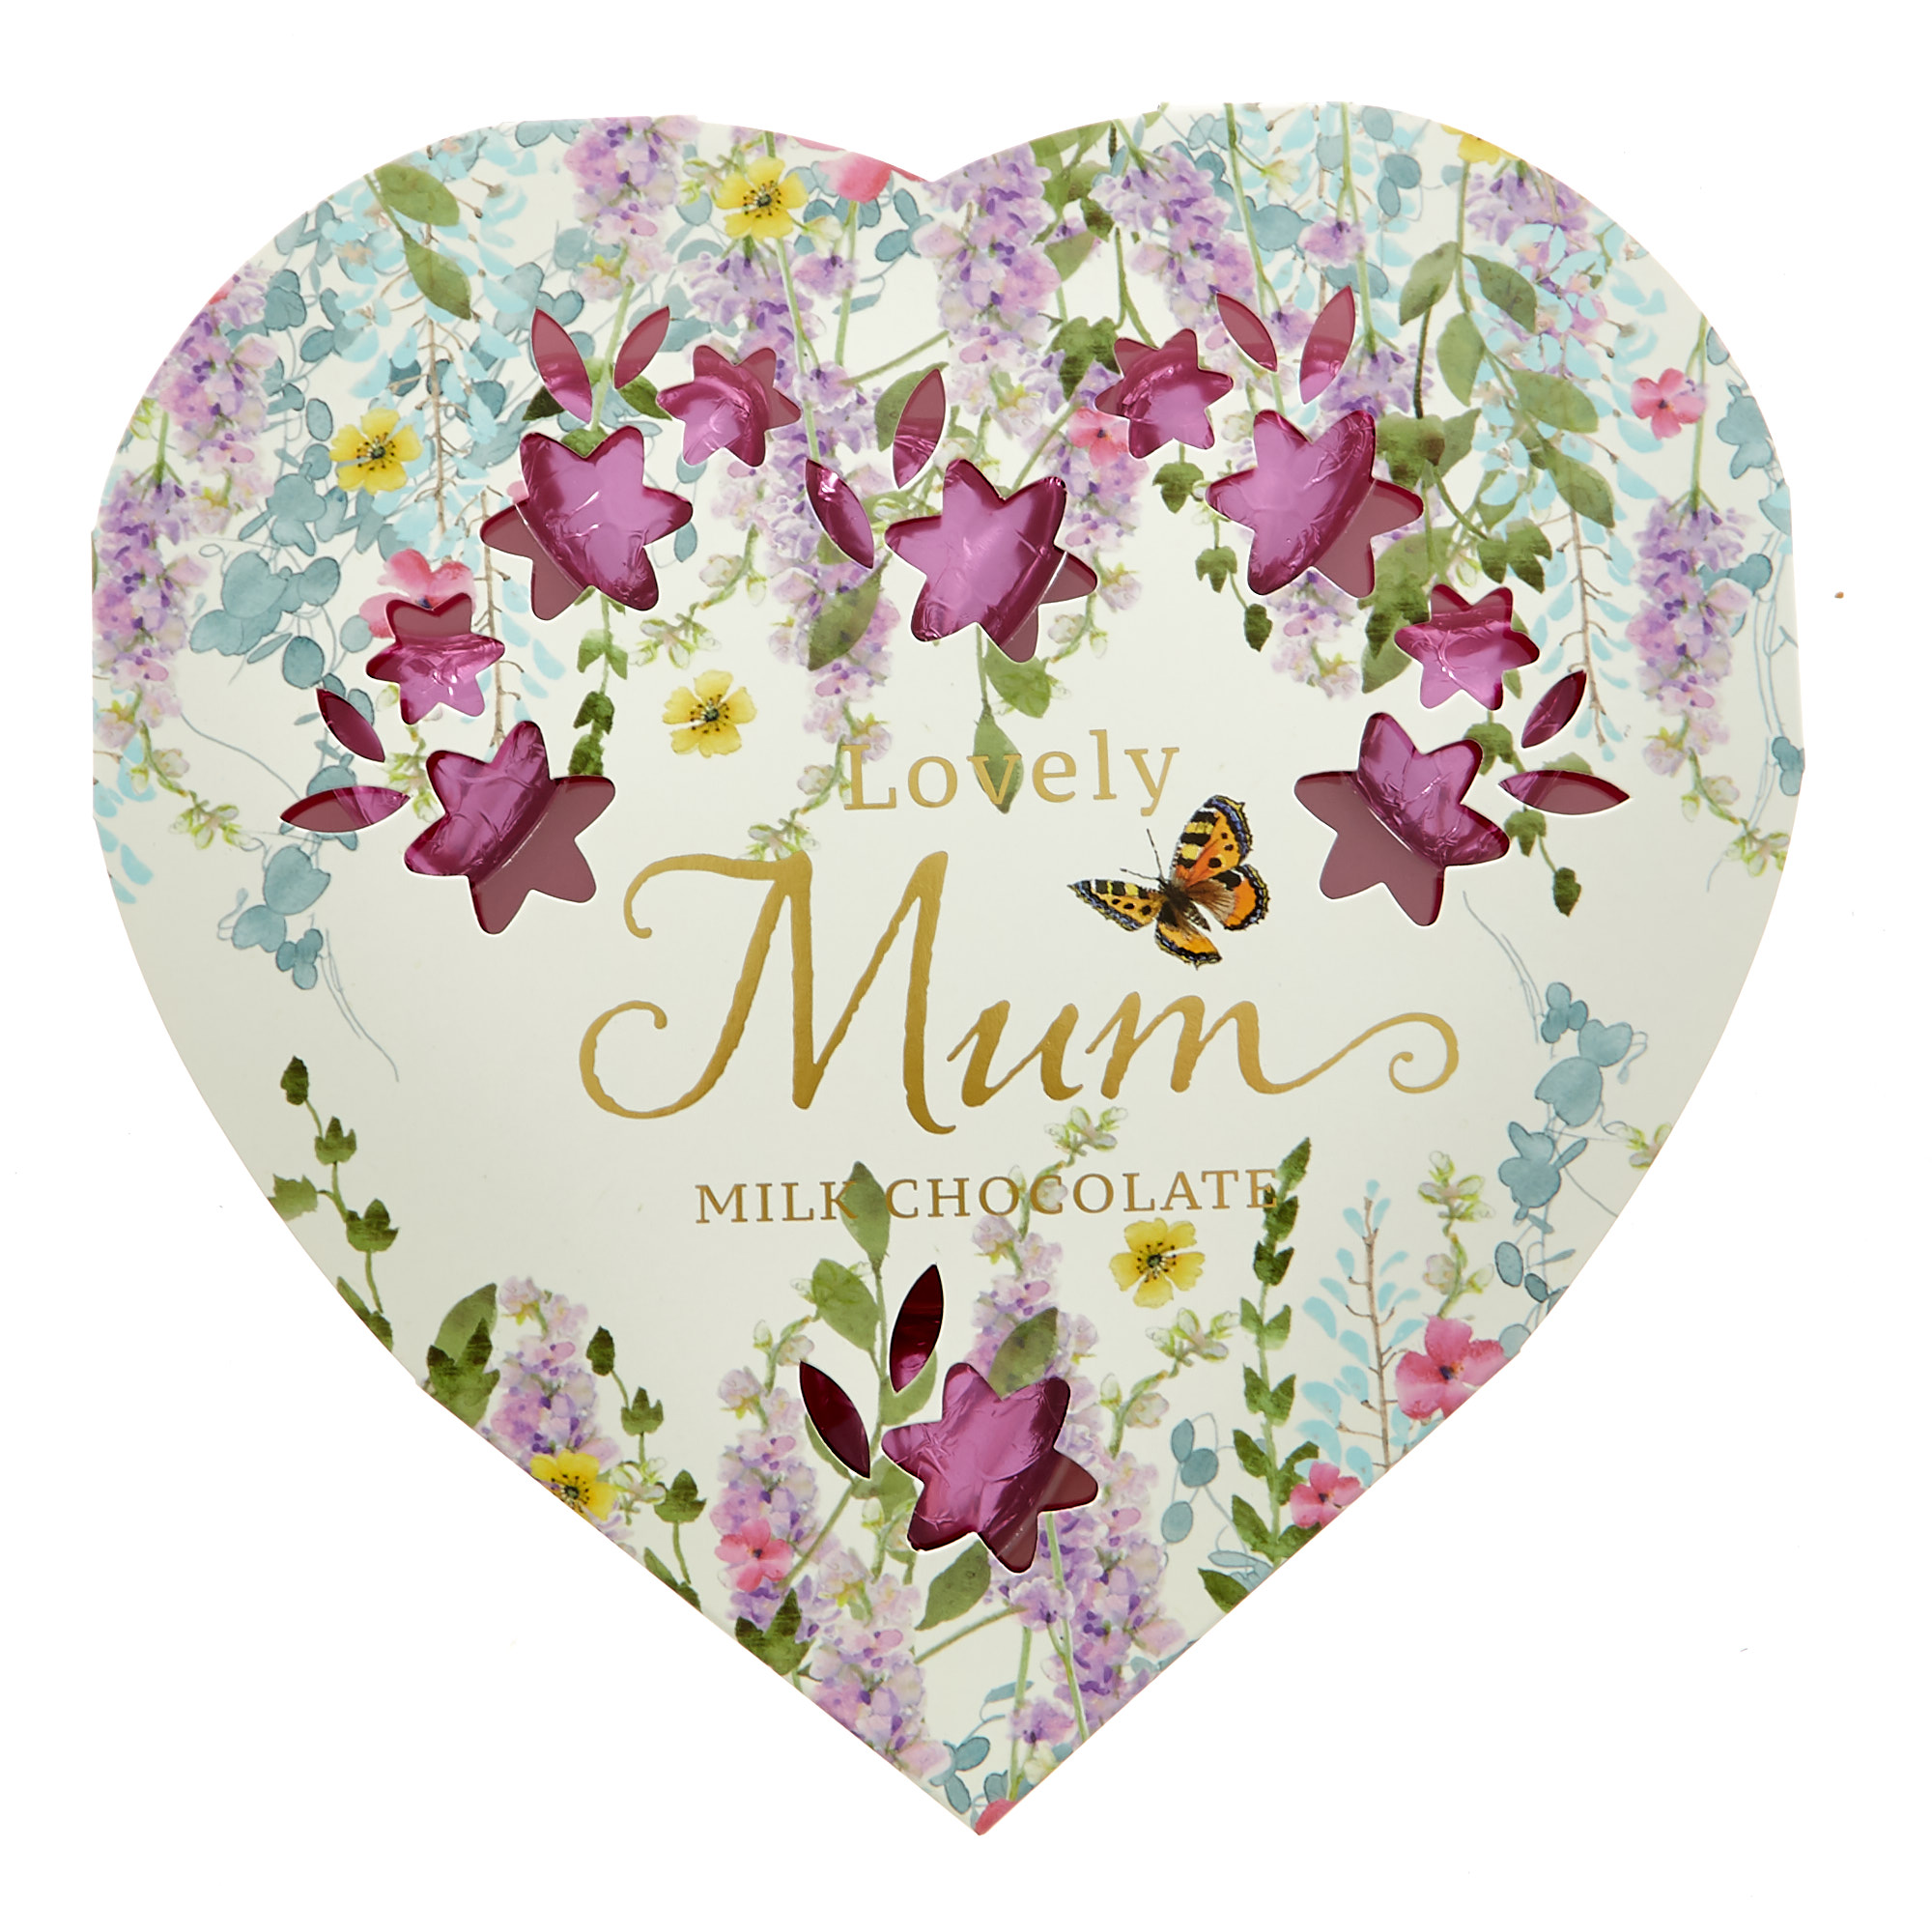 Lovely Mum Milk Chocolate Hearts